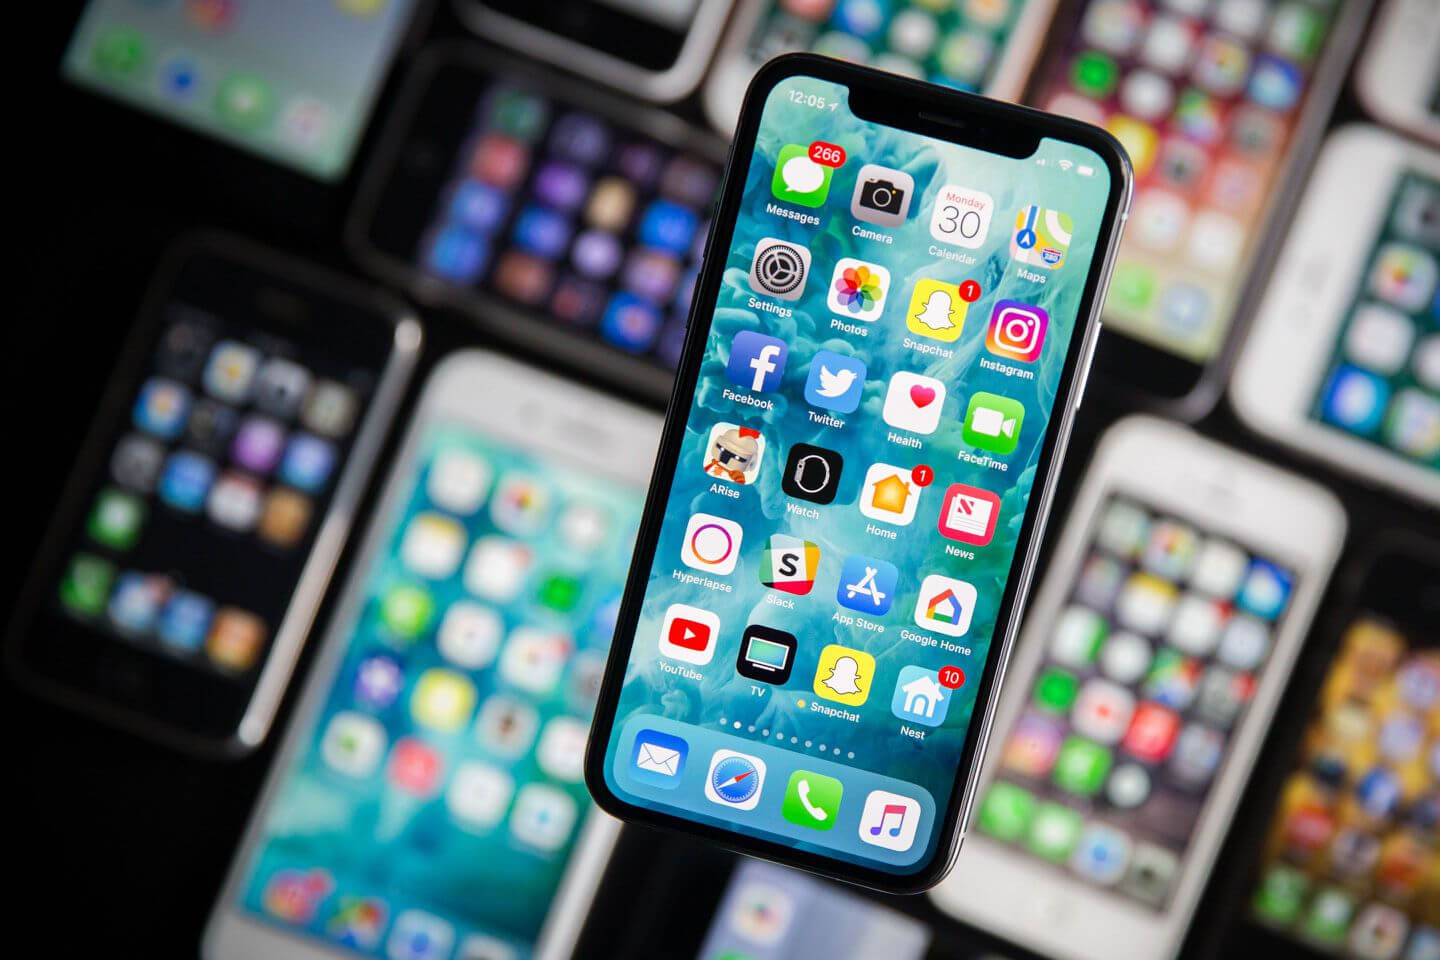 2018 iPhones to support gigabit LTE transmission speeds